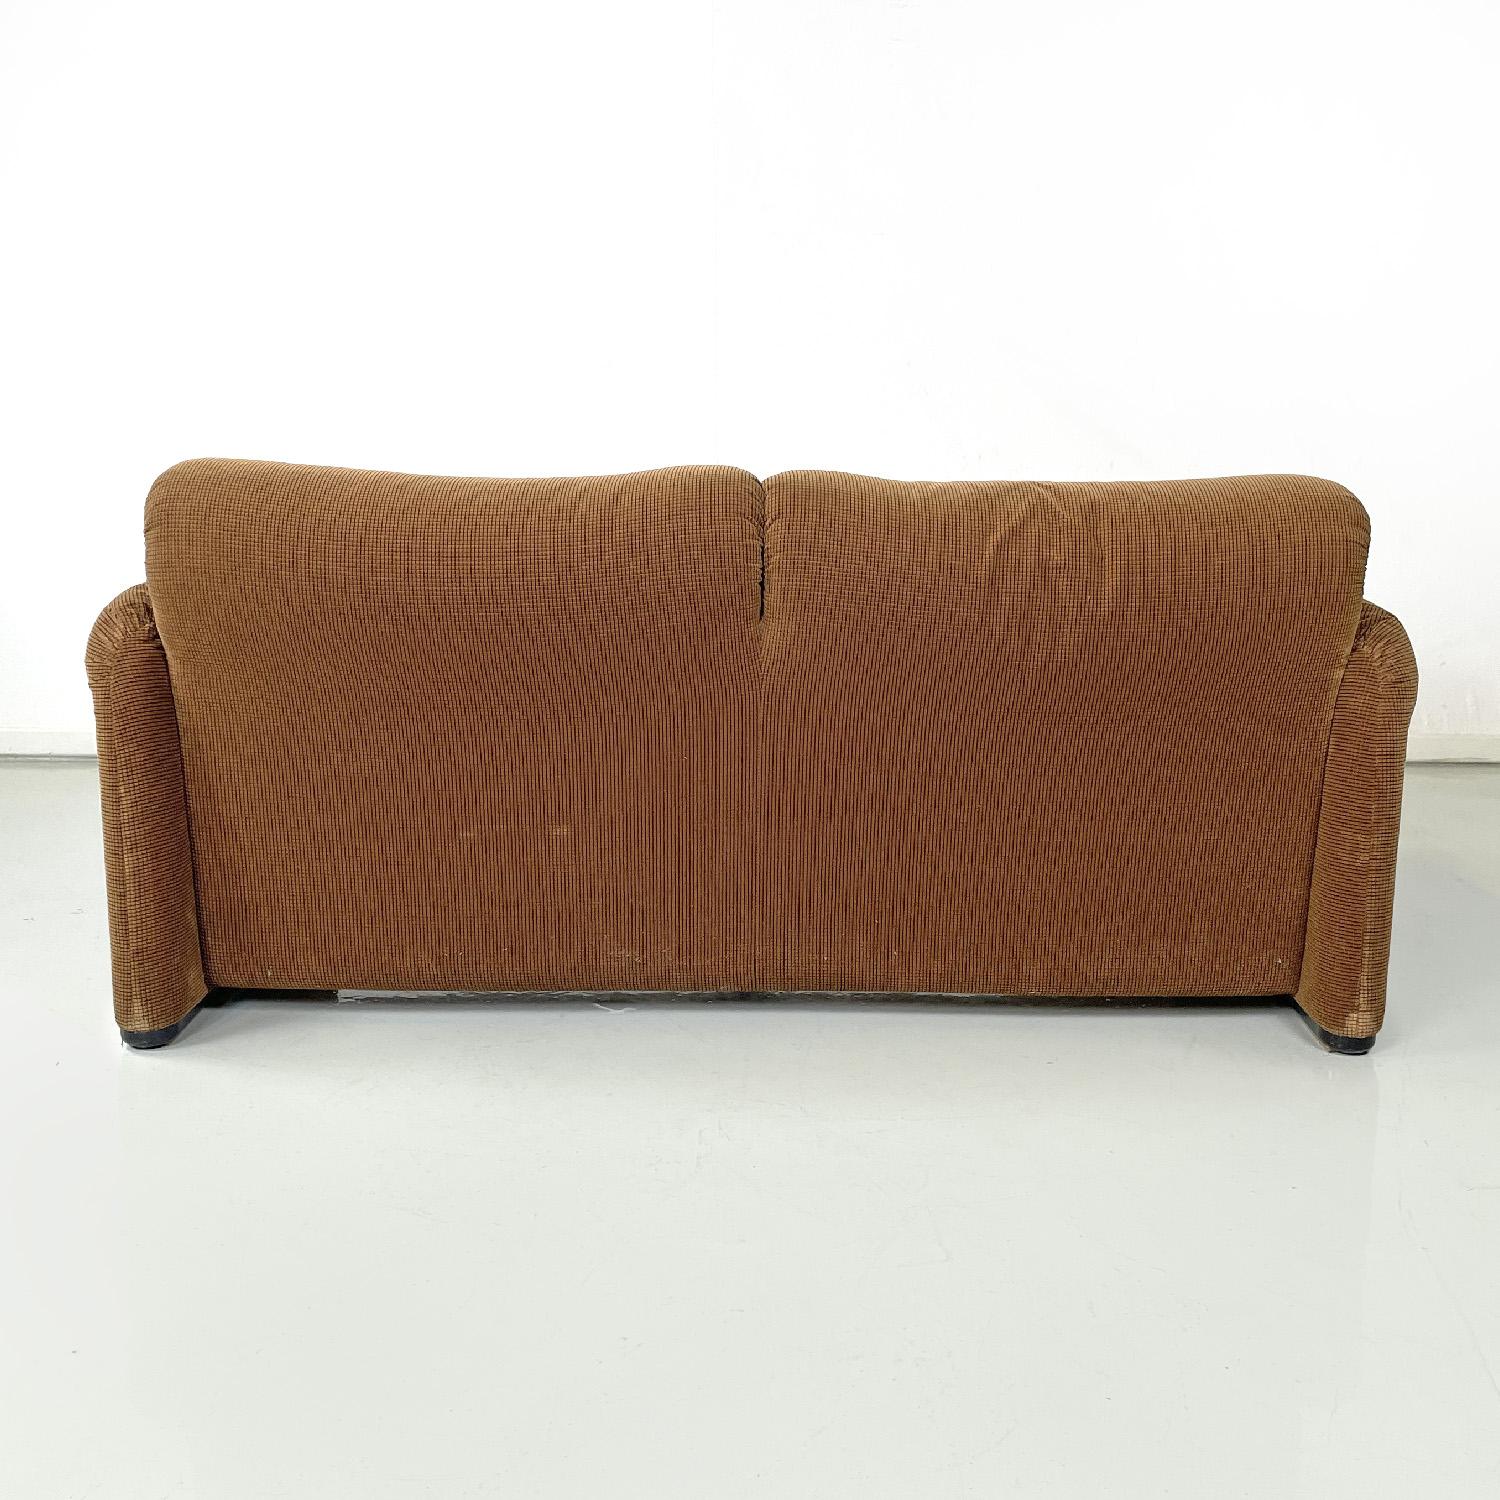 Italian modern brown sofas Maralunga by Vico Magistretti for Cassina, 1973 For Sale 3